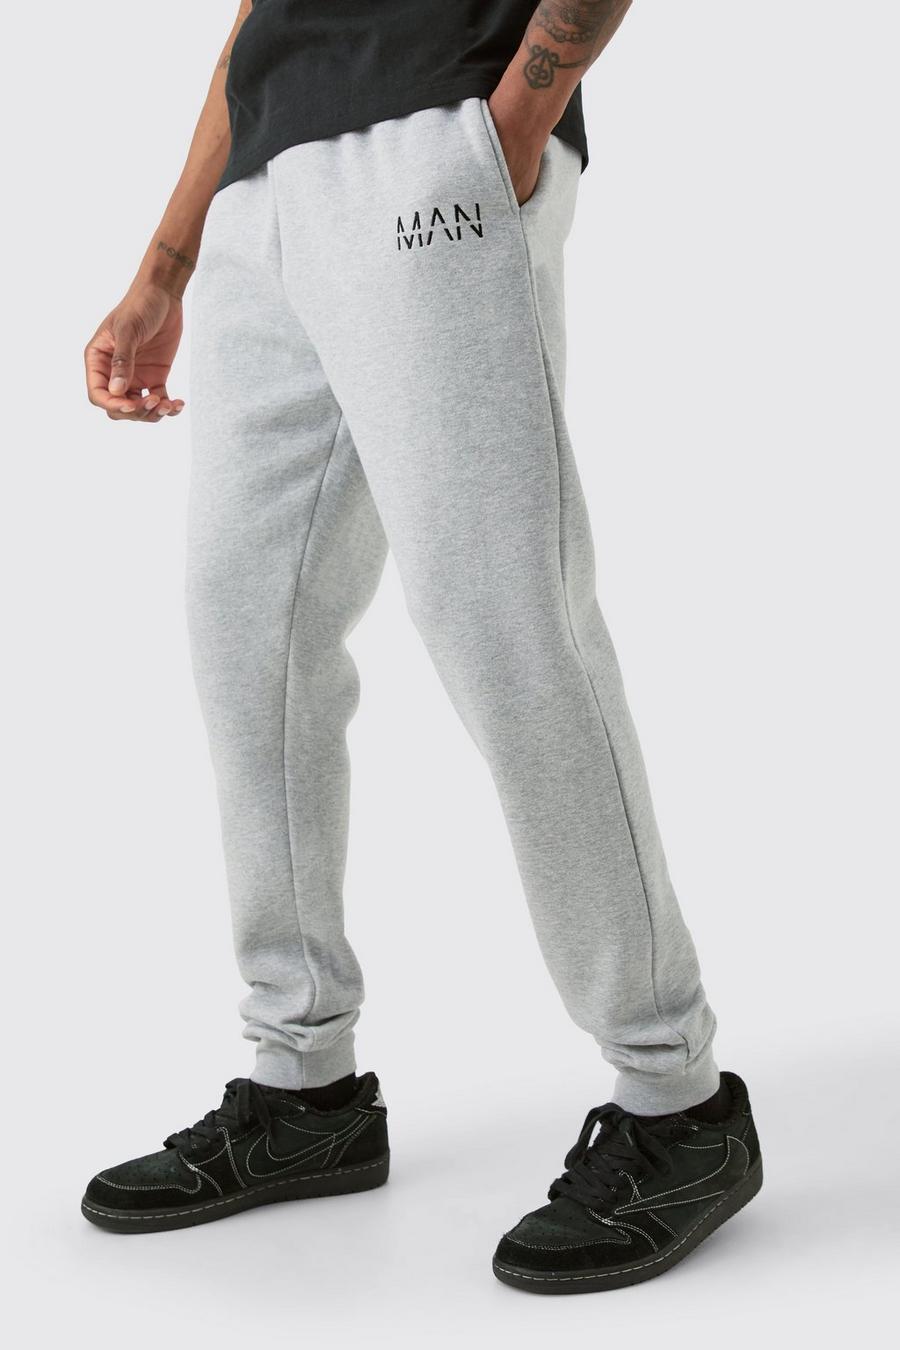 Pantalón deportivo Tall MAN ajustado en gris jaspeado image number 1